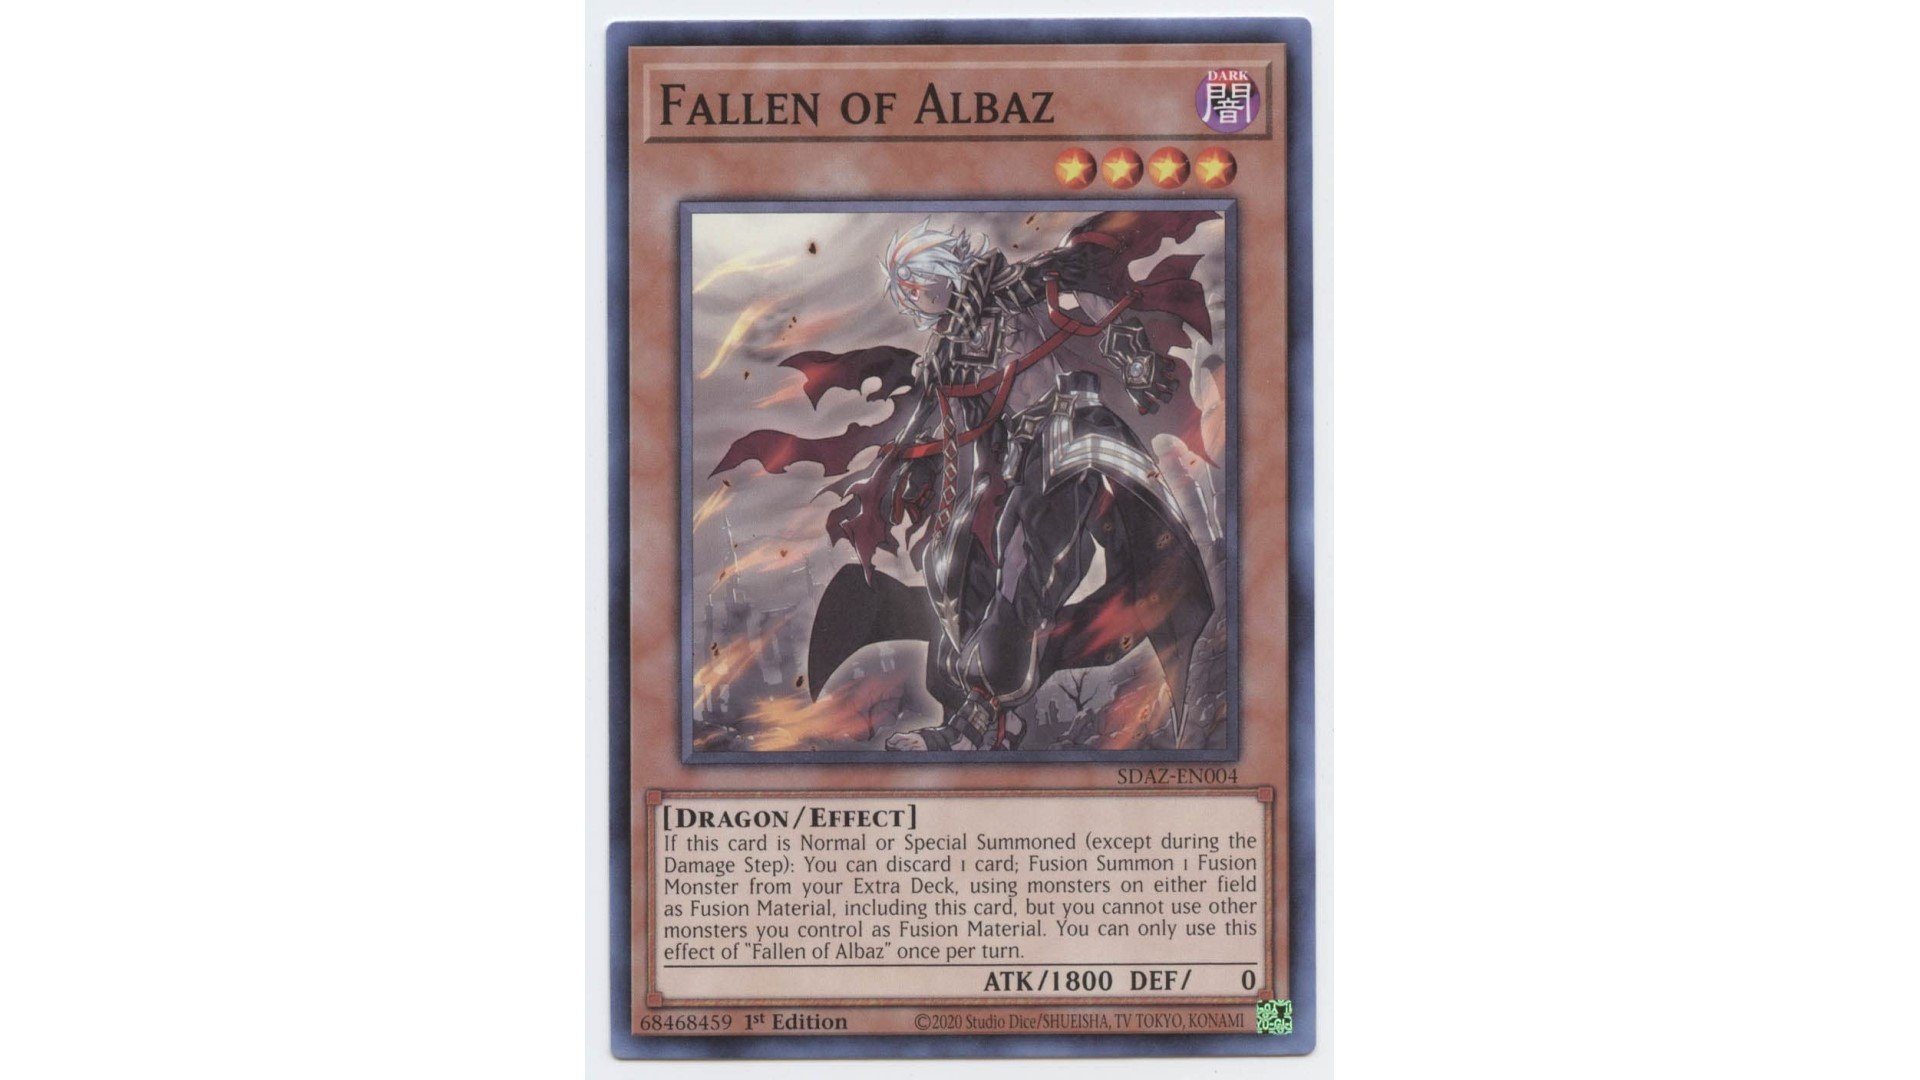 Yu Gi Oh Master Duel meta decks - the yugioh card Fallen of Albaz